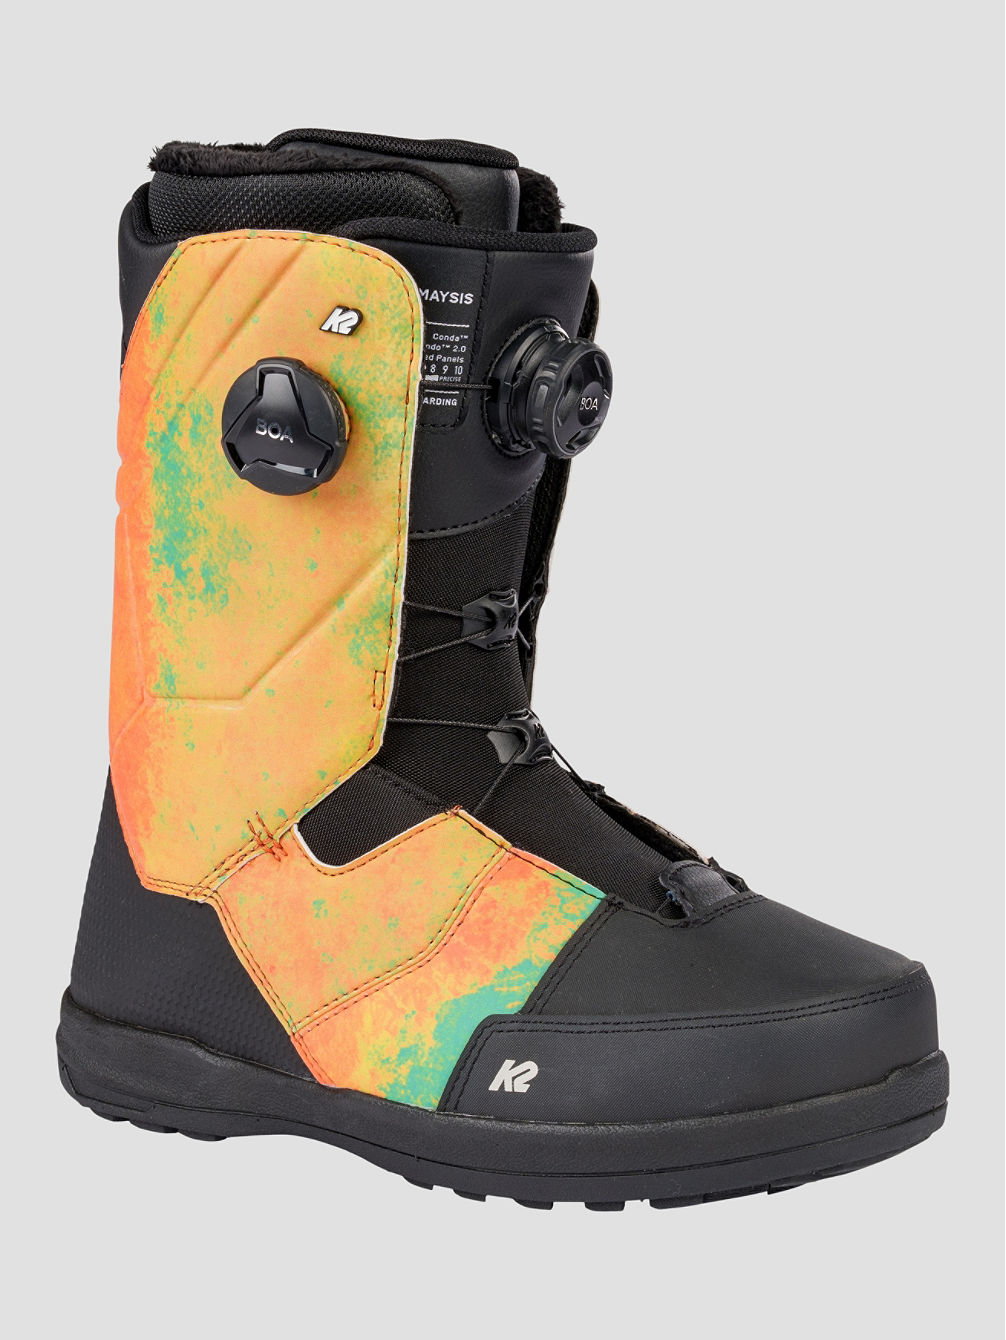 Maysis 2023 Boots de snowboard